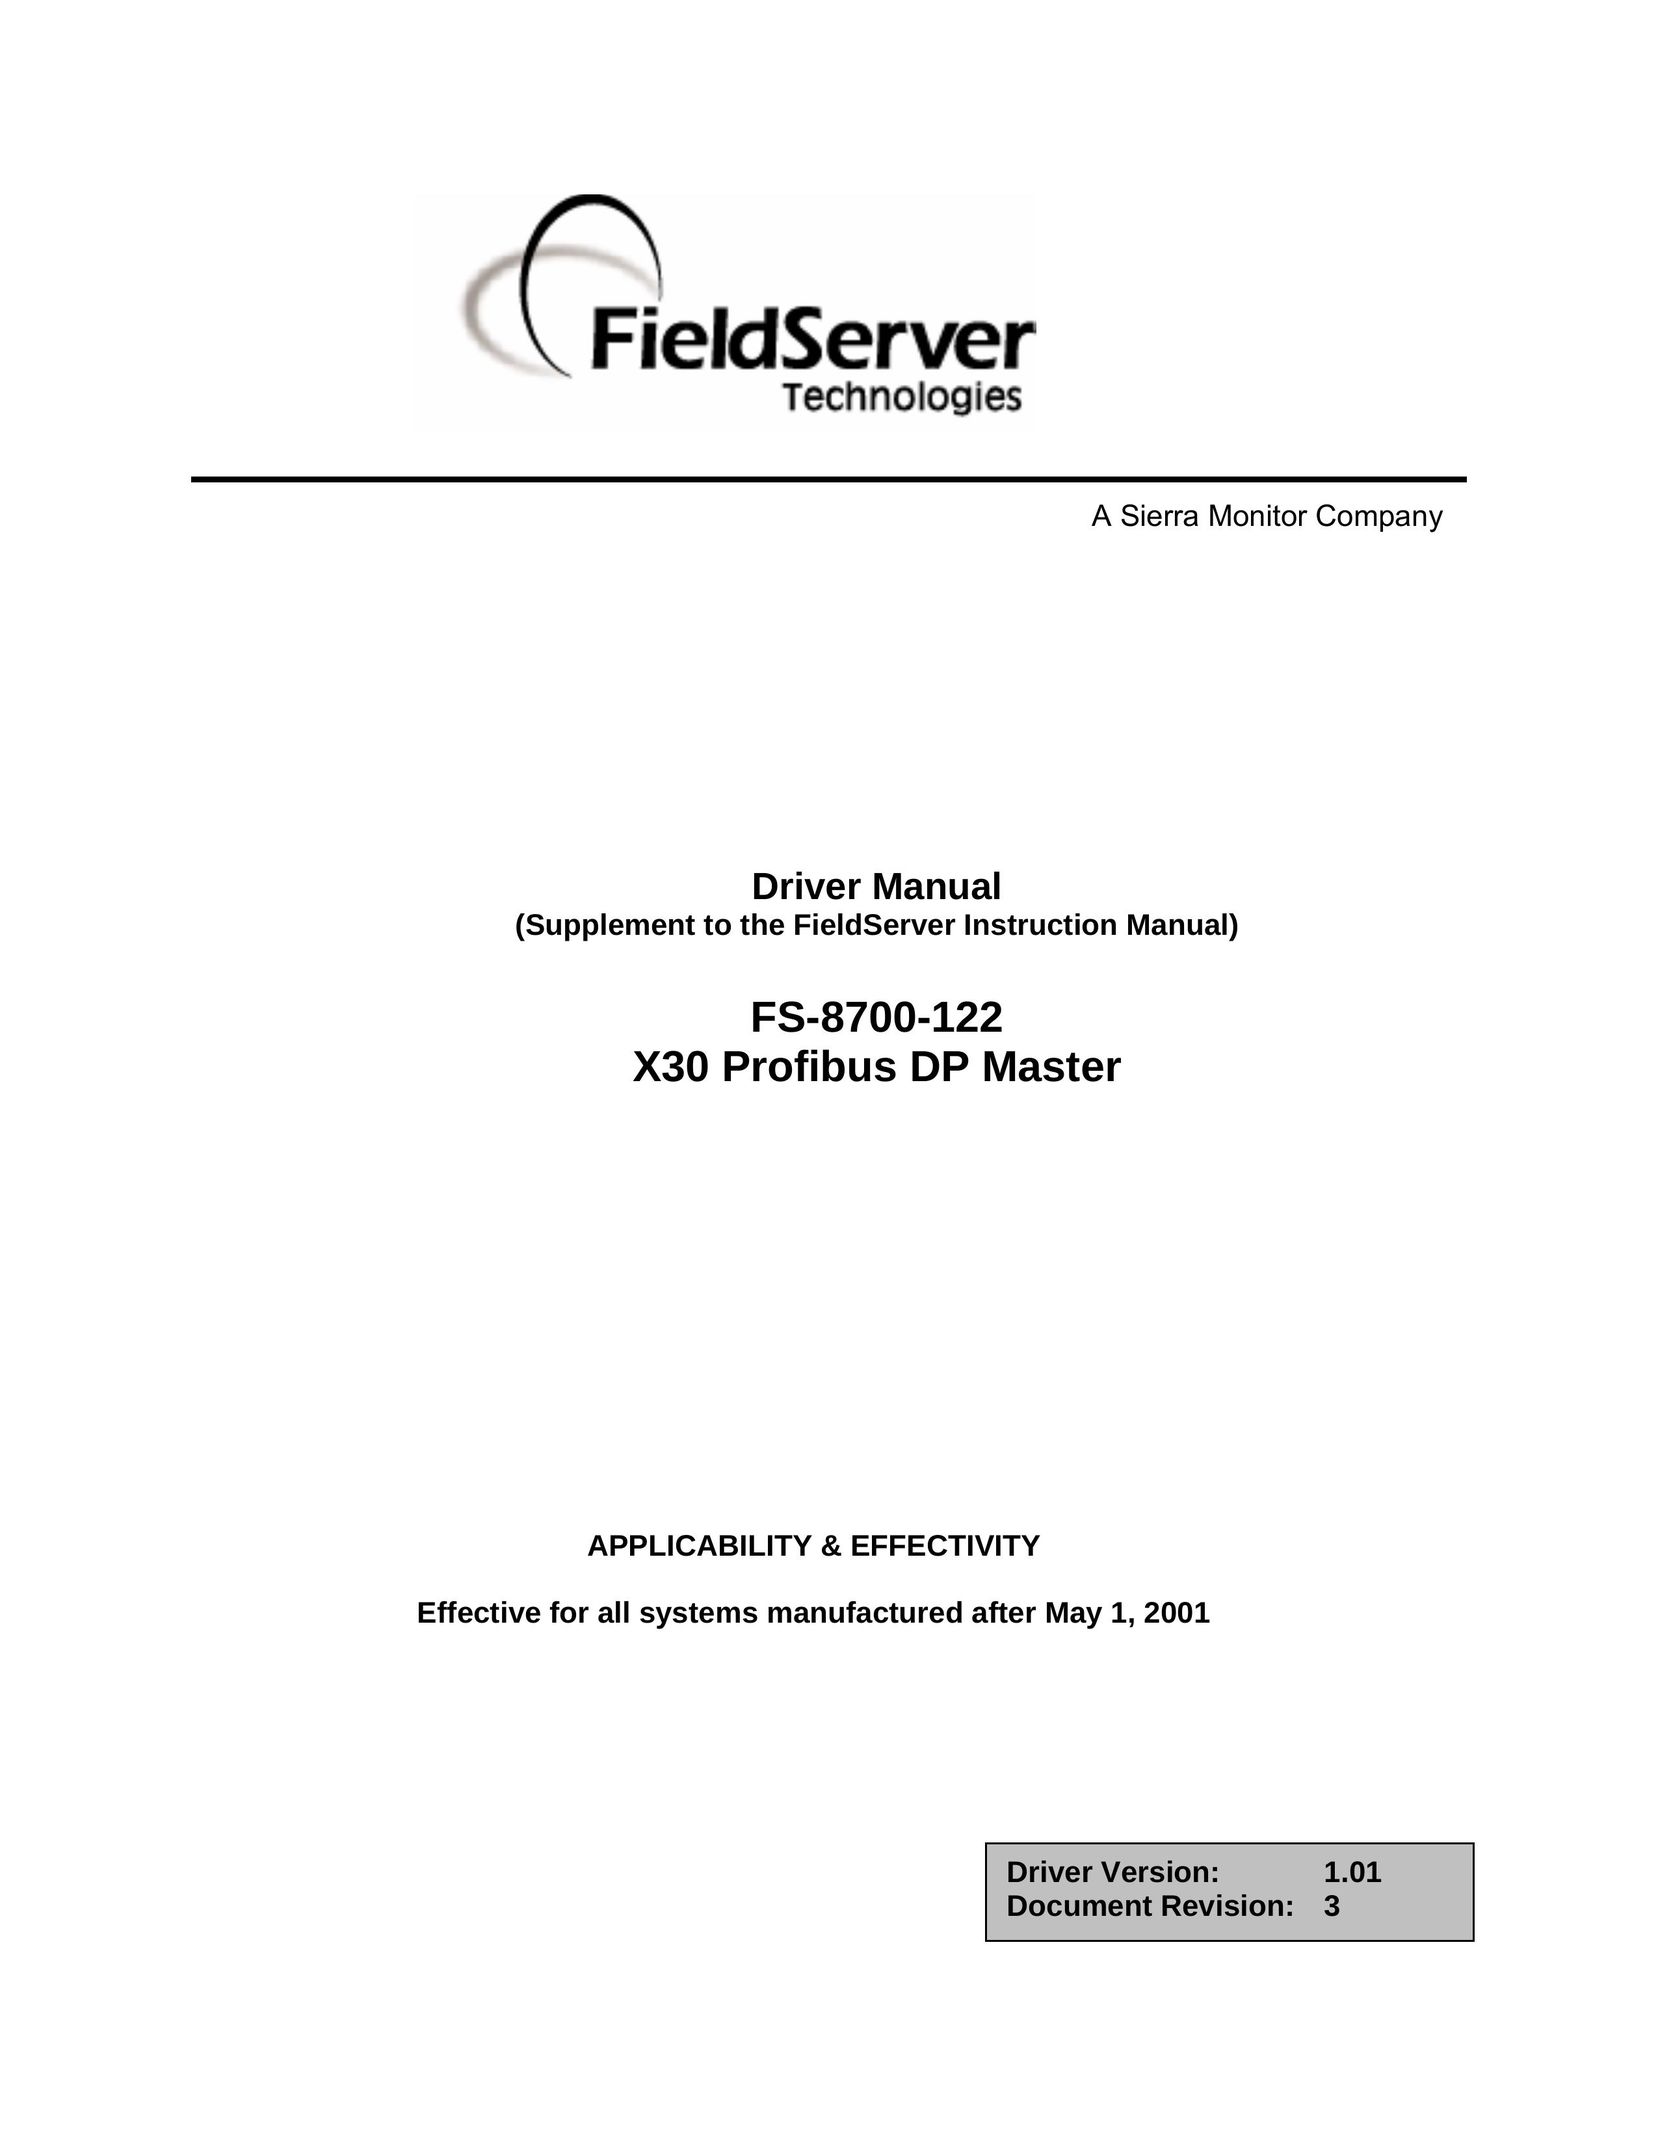 FieldServer FS-8700-122 Computer Drive User Manual